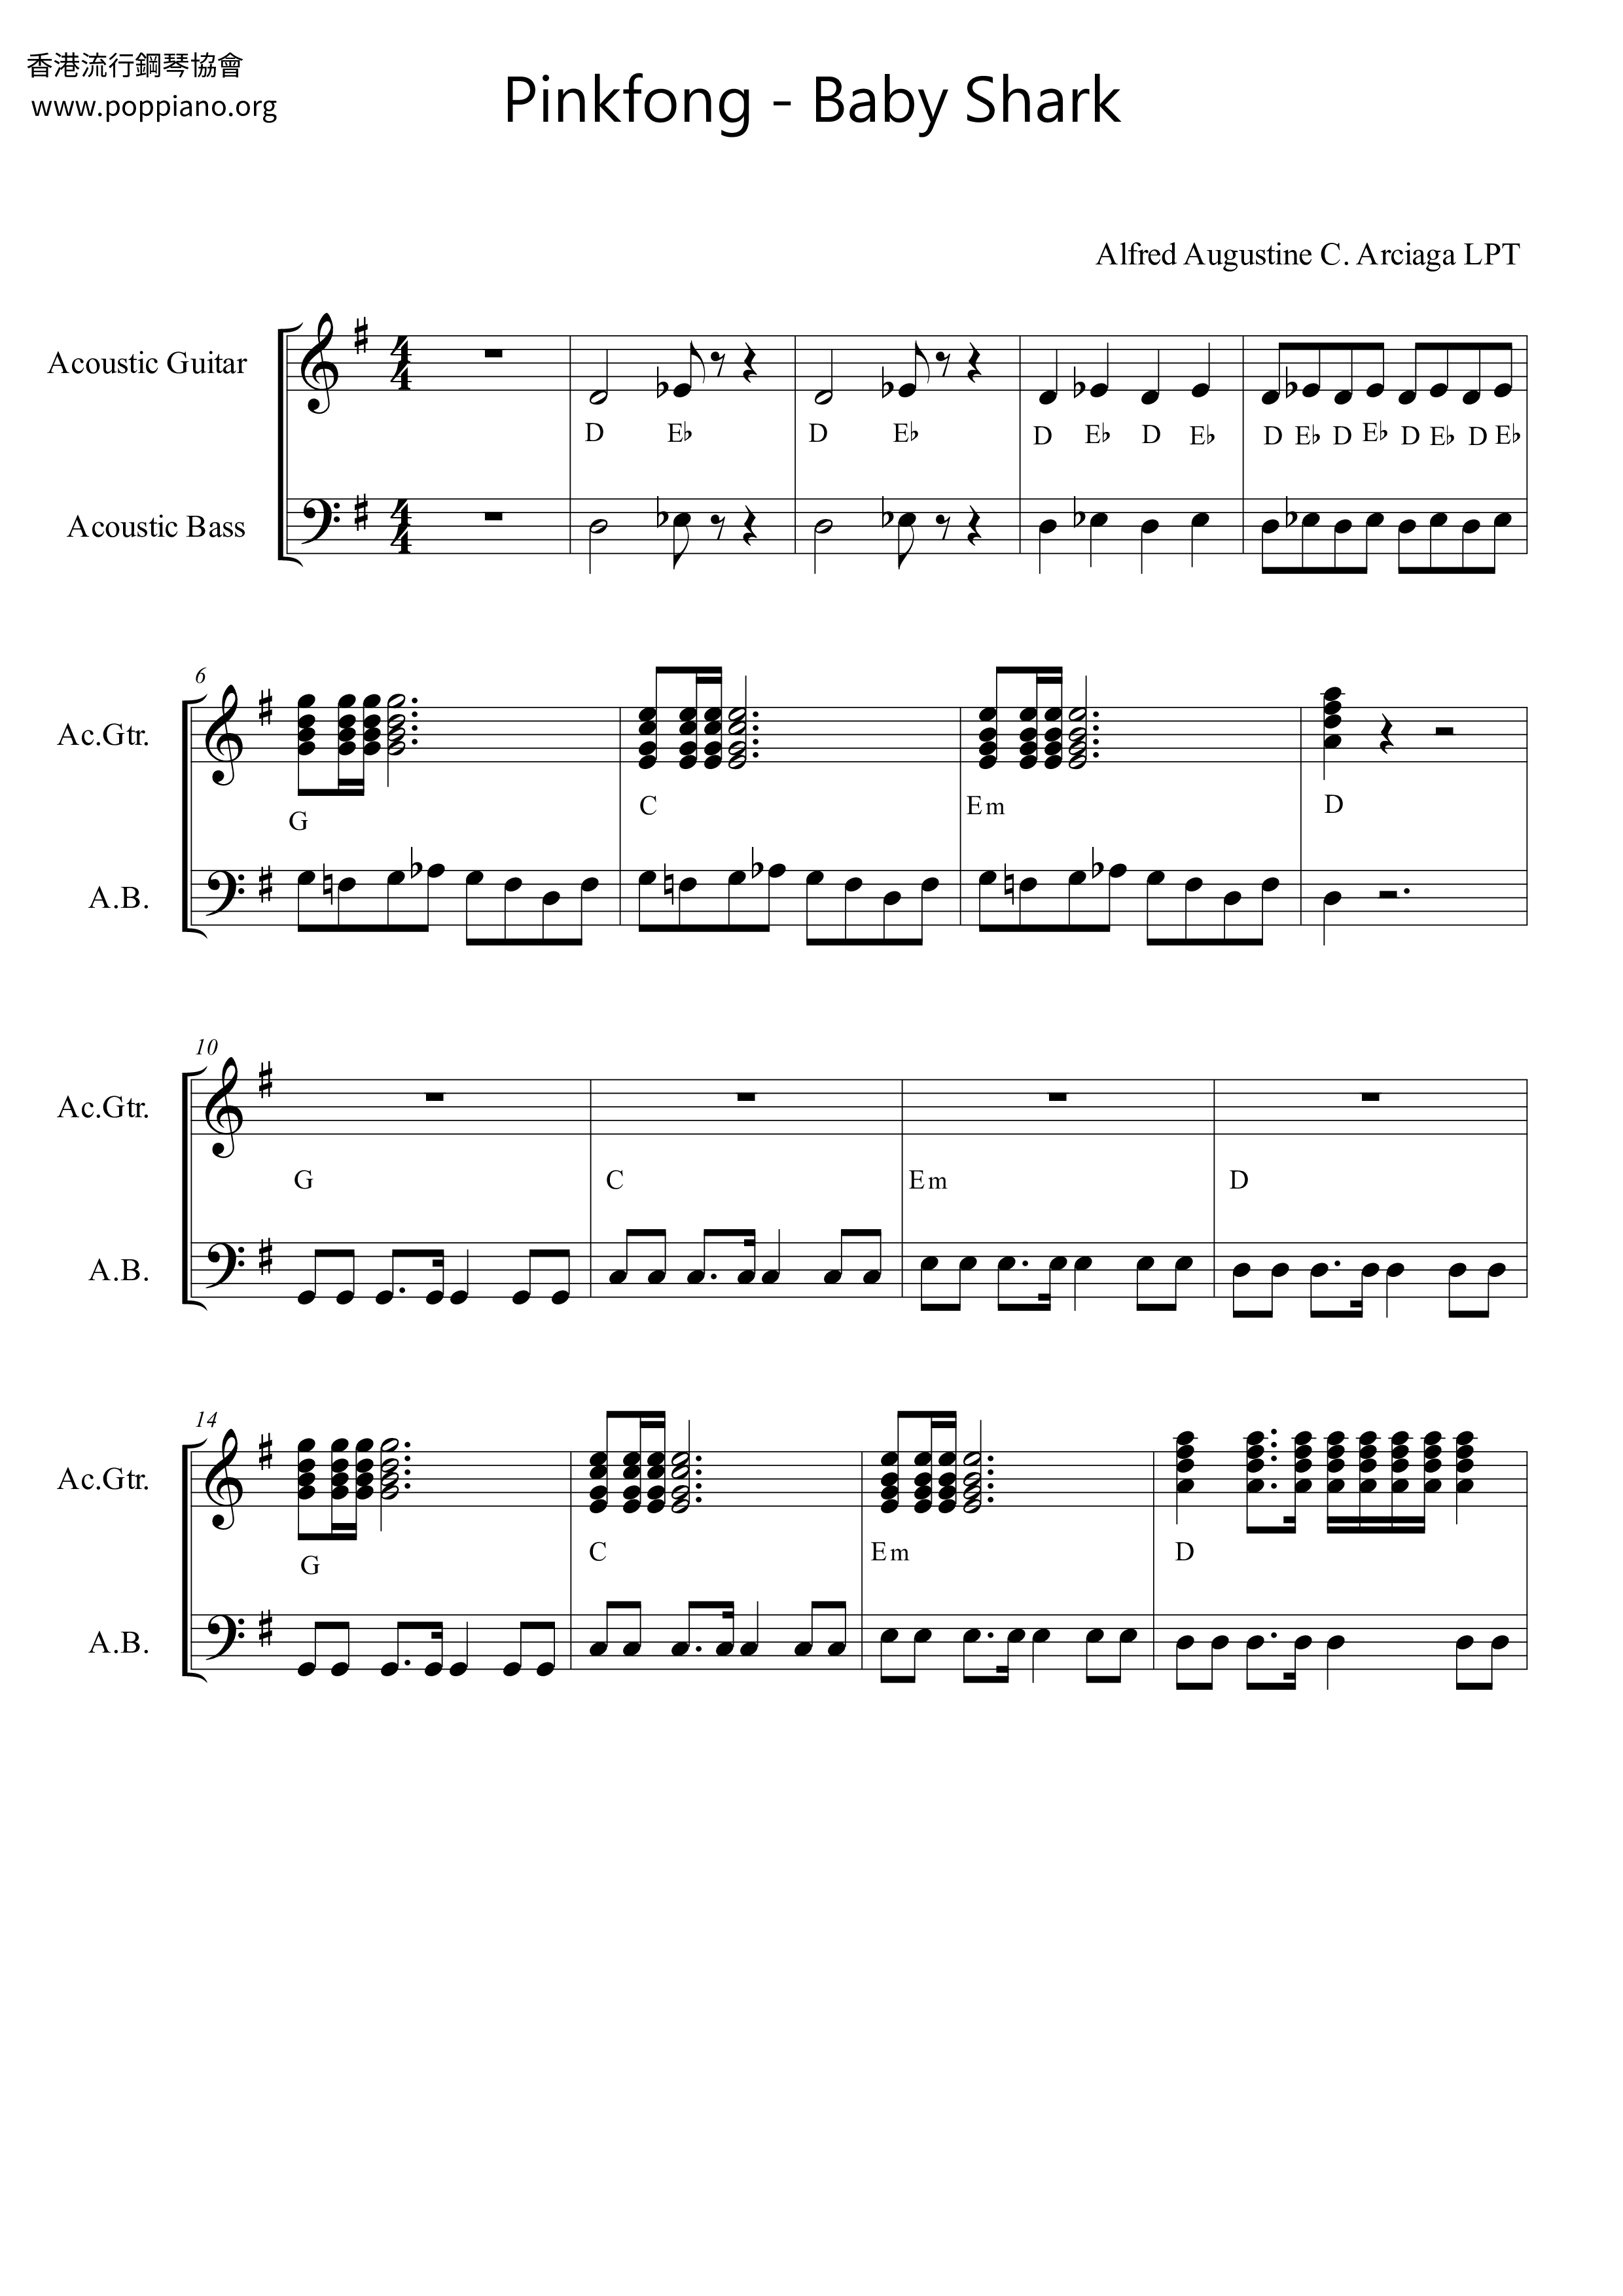 pinkfong-baby-shark-sheet-music-pdf-free-score-download